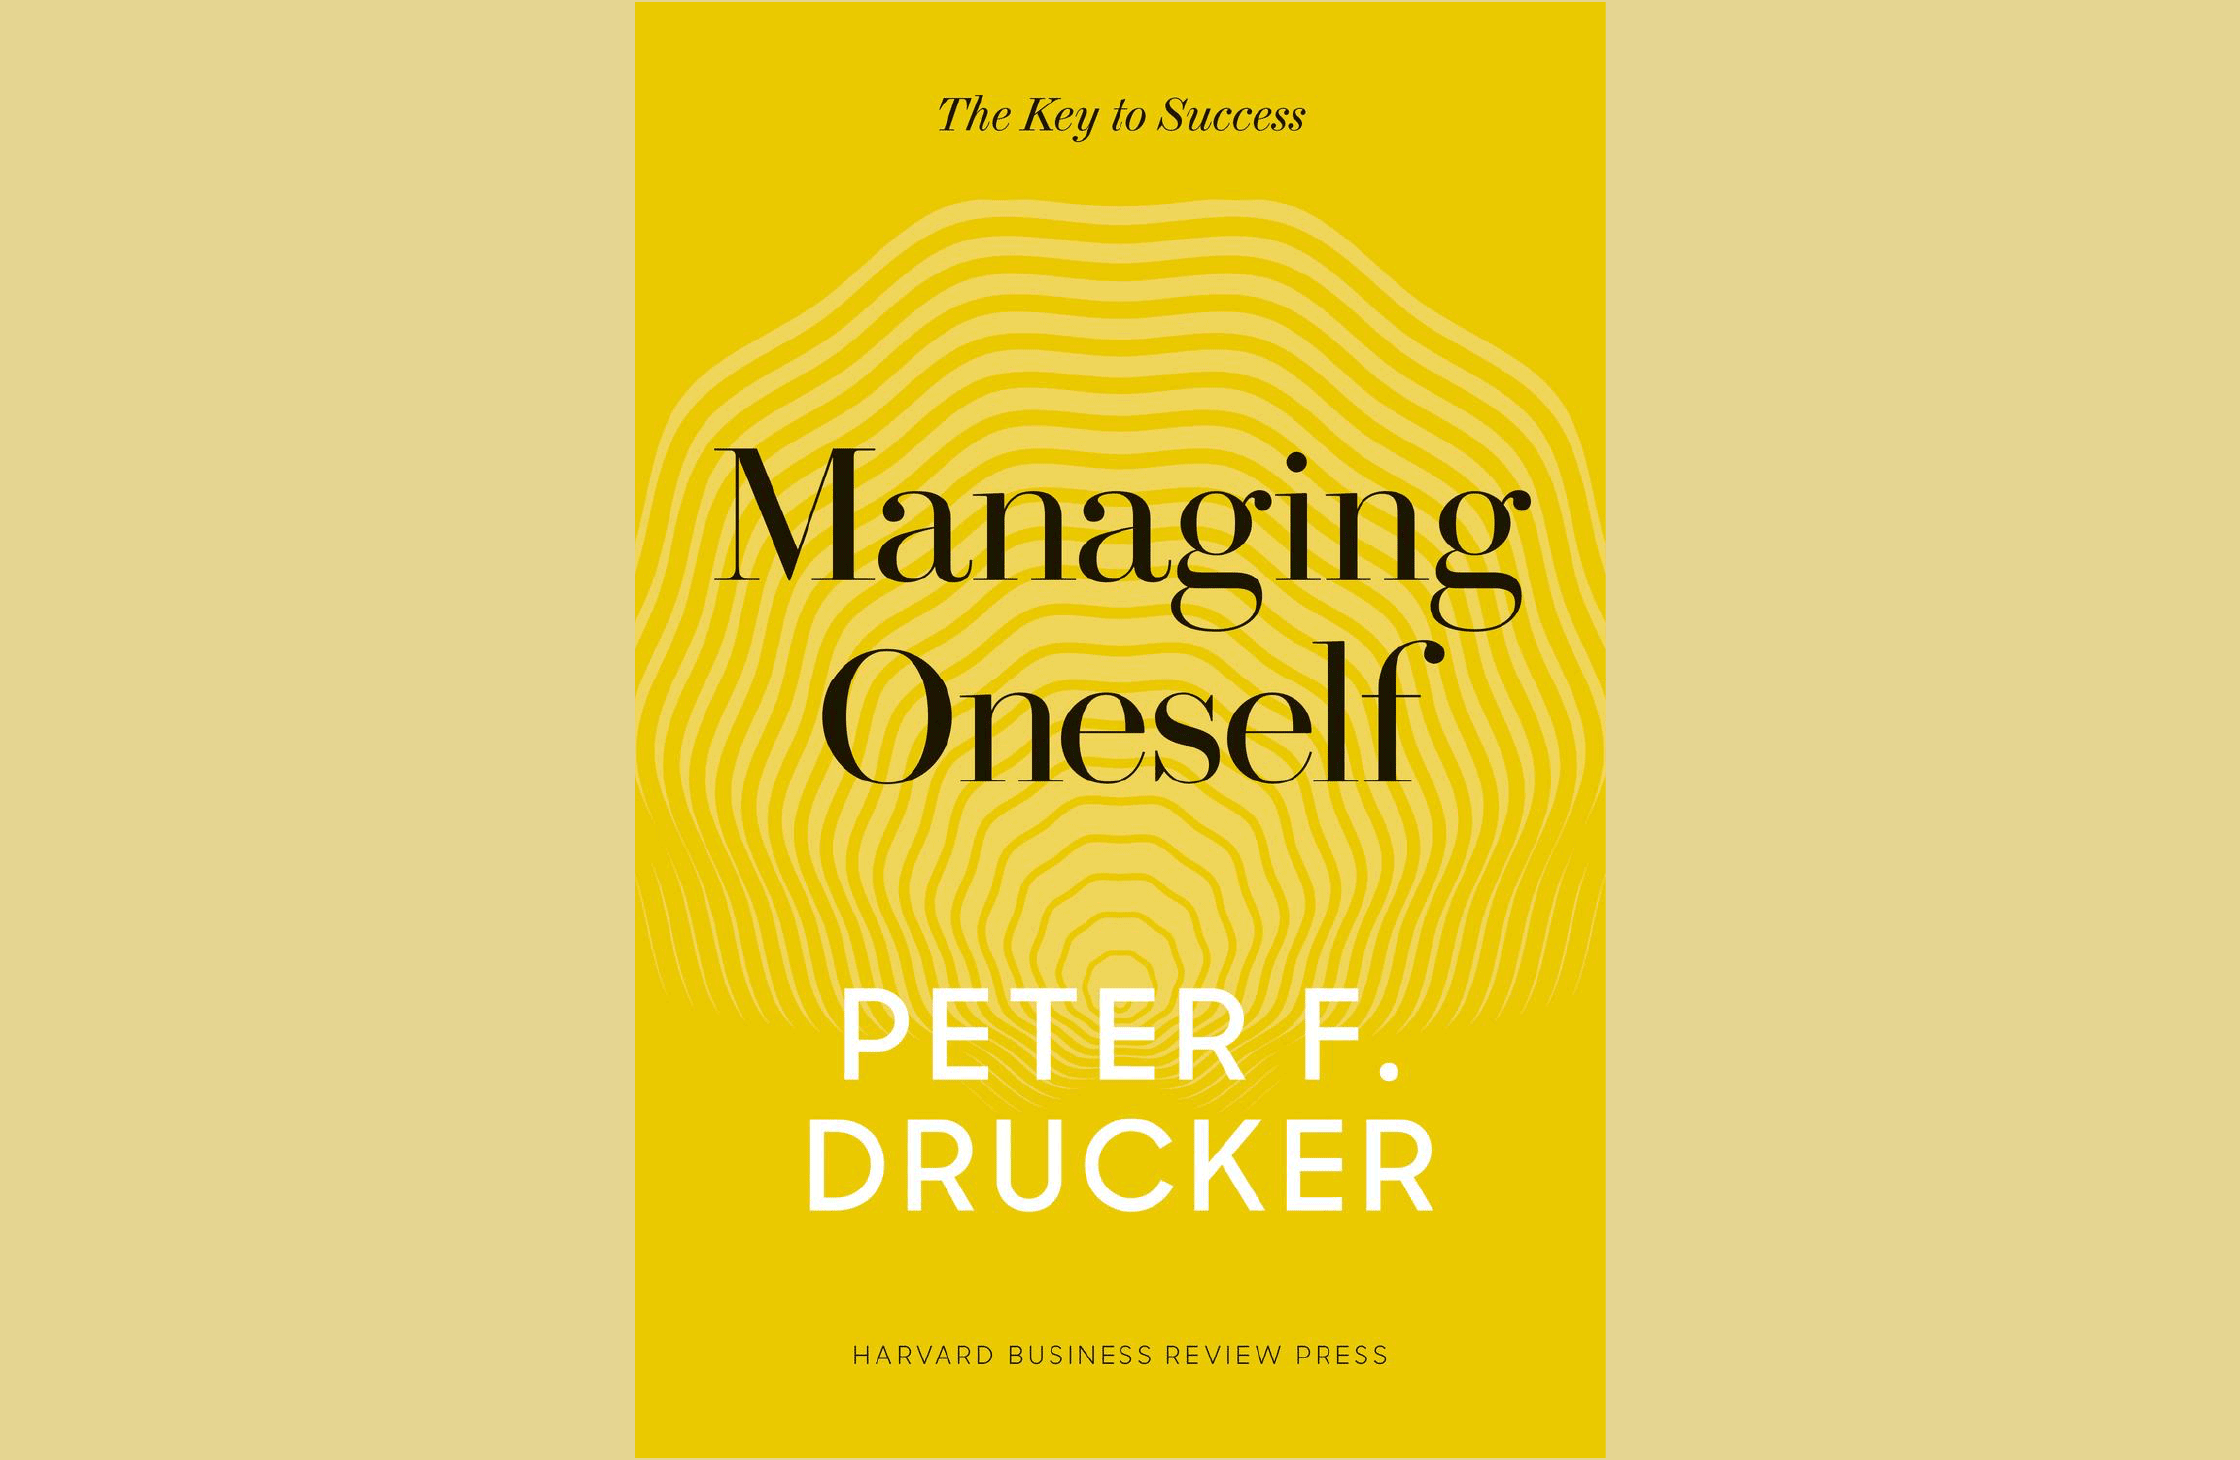 Summary: "Managing Oneself" by Peter Drucker